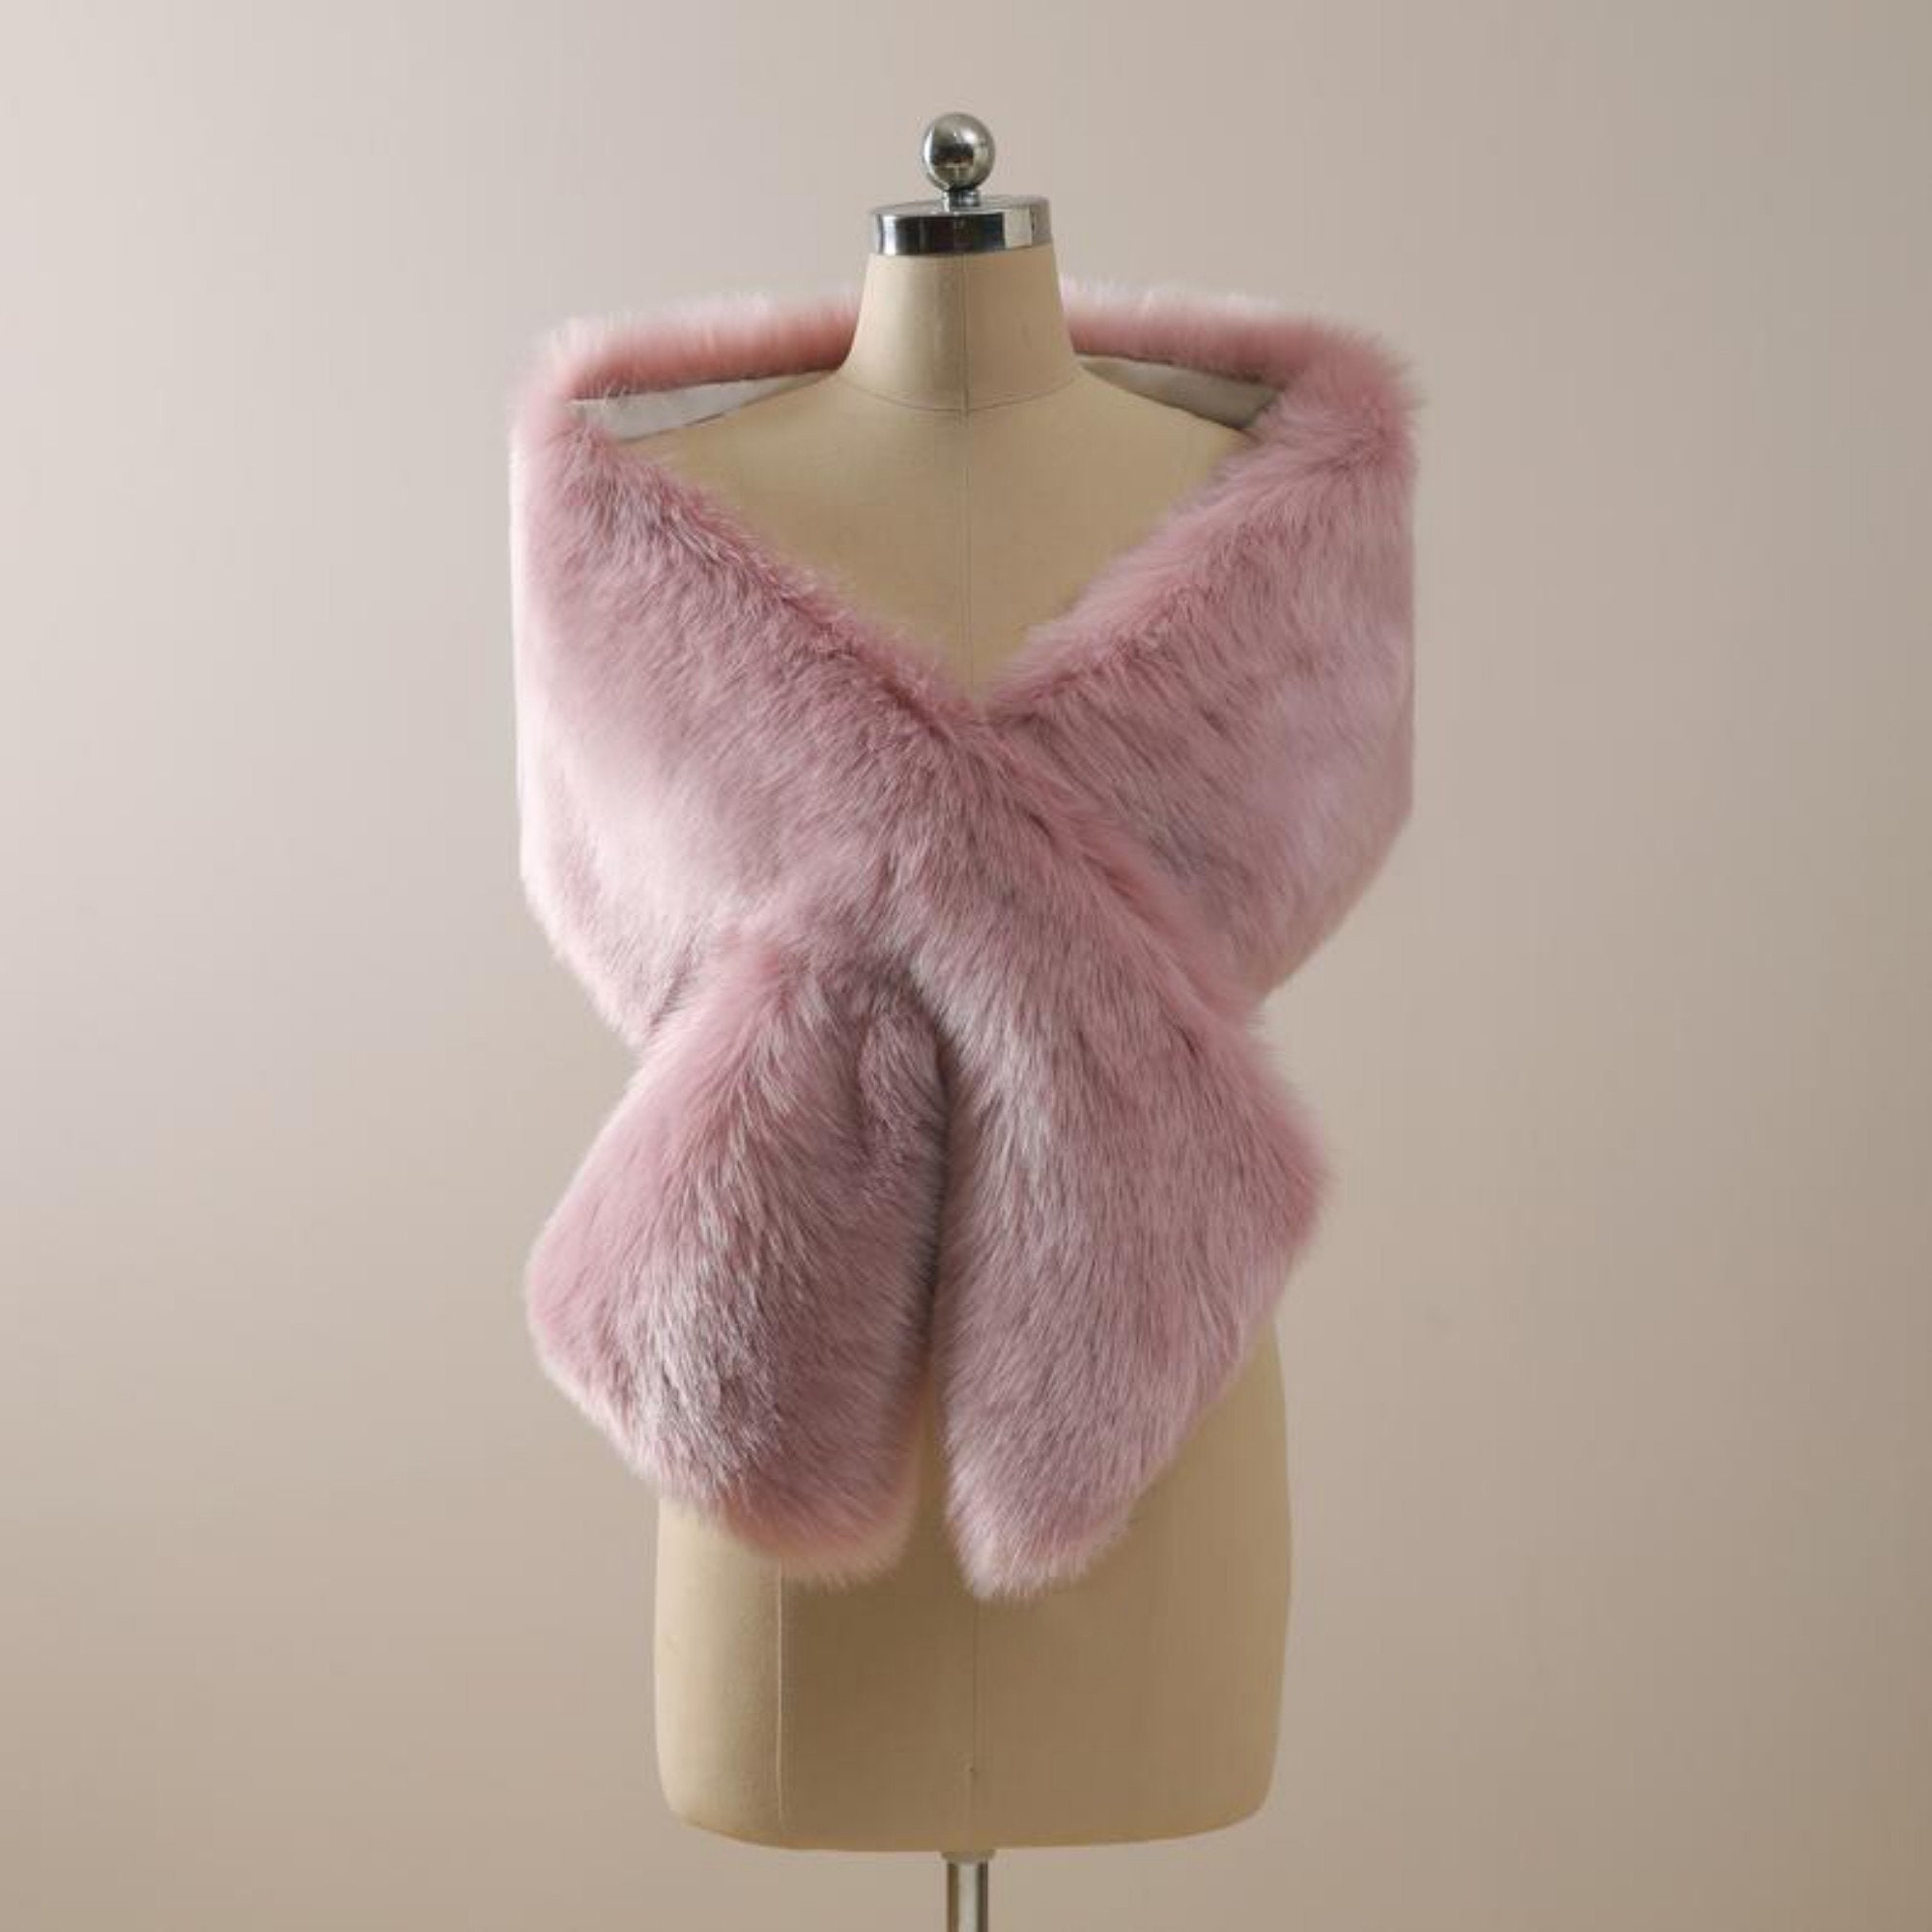 Eden LIGHT PINK Shaggy Long Pile Soft Faux Fur Fabric for Fursuit, Cosplay  Costume, Photo Prop, Trim, Throw Pillow, Crafts 